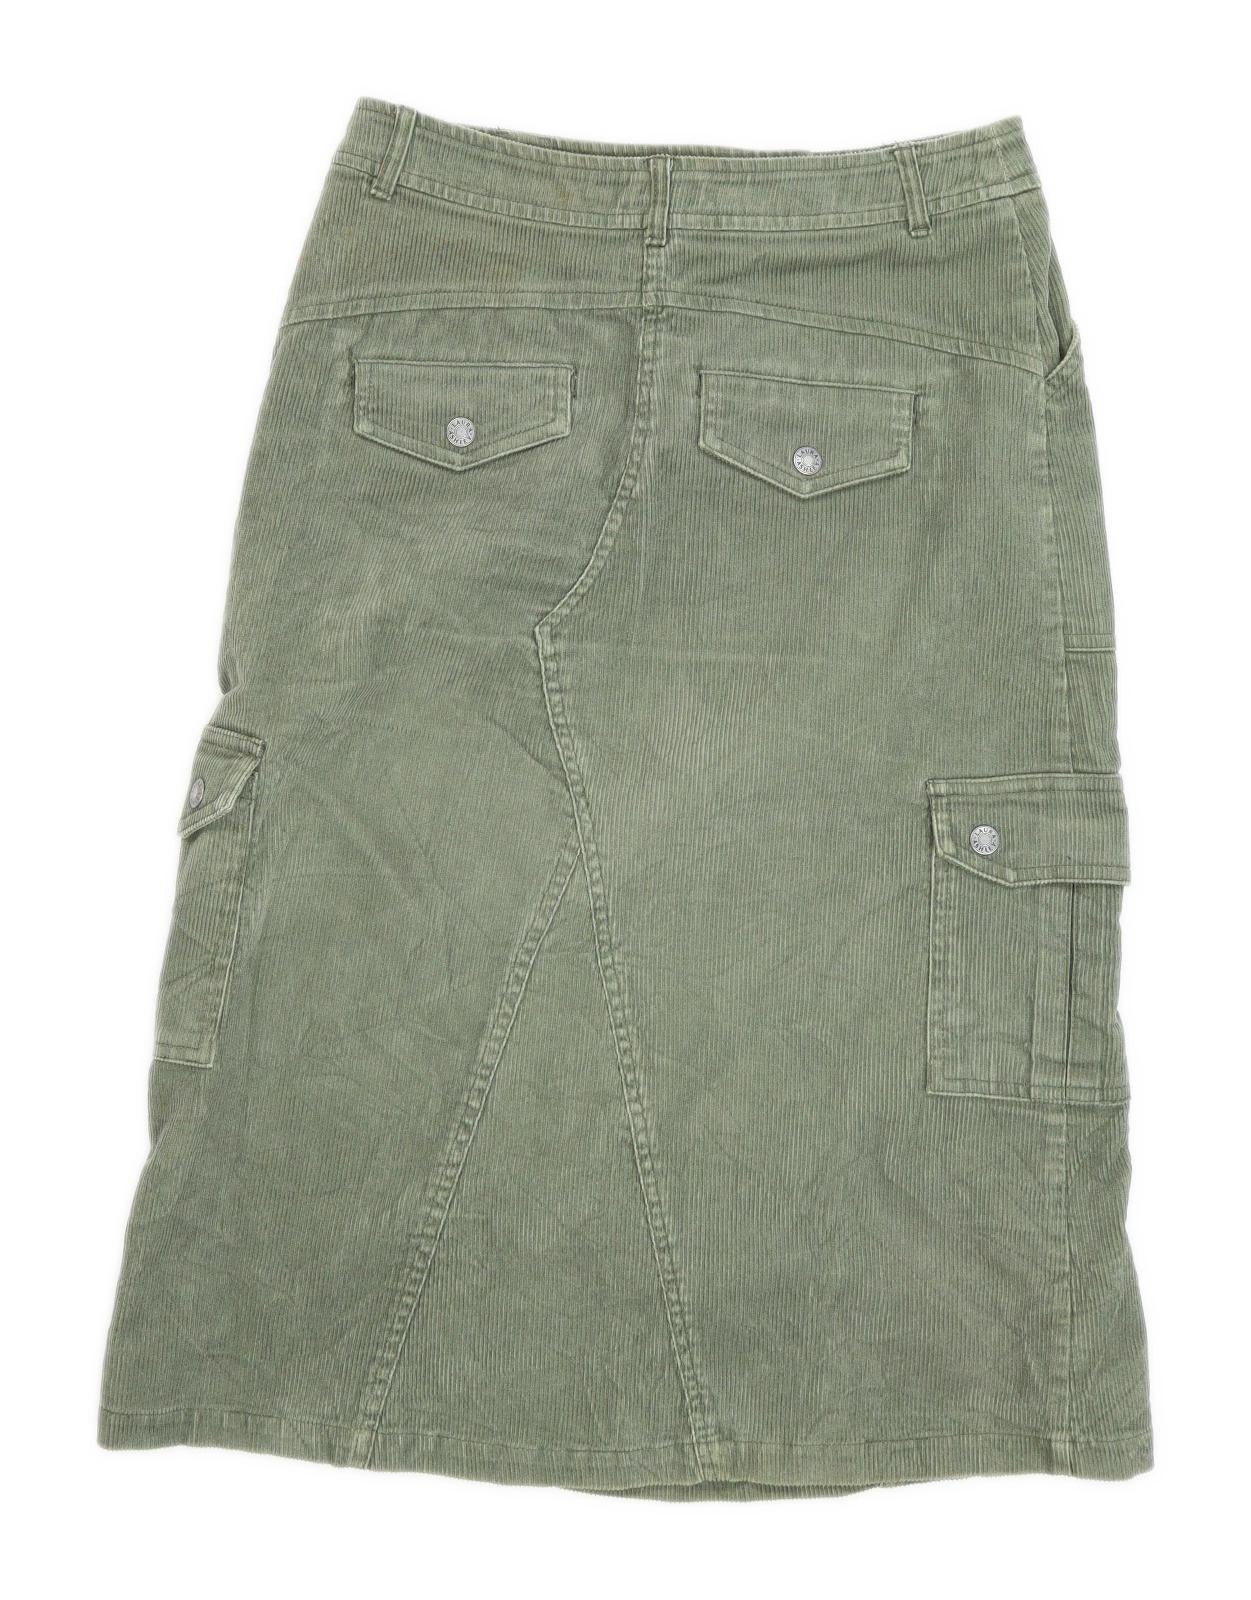 Laura Ashley Womens Size 8 Corduroy Green Pencil Skirt (Regular)